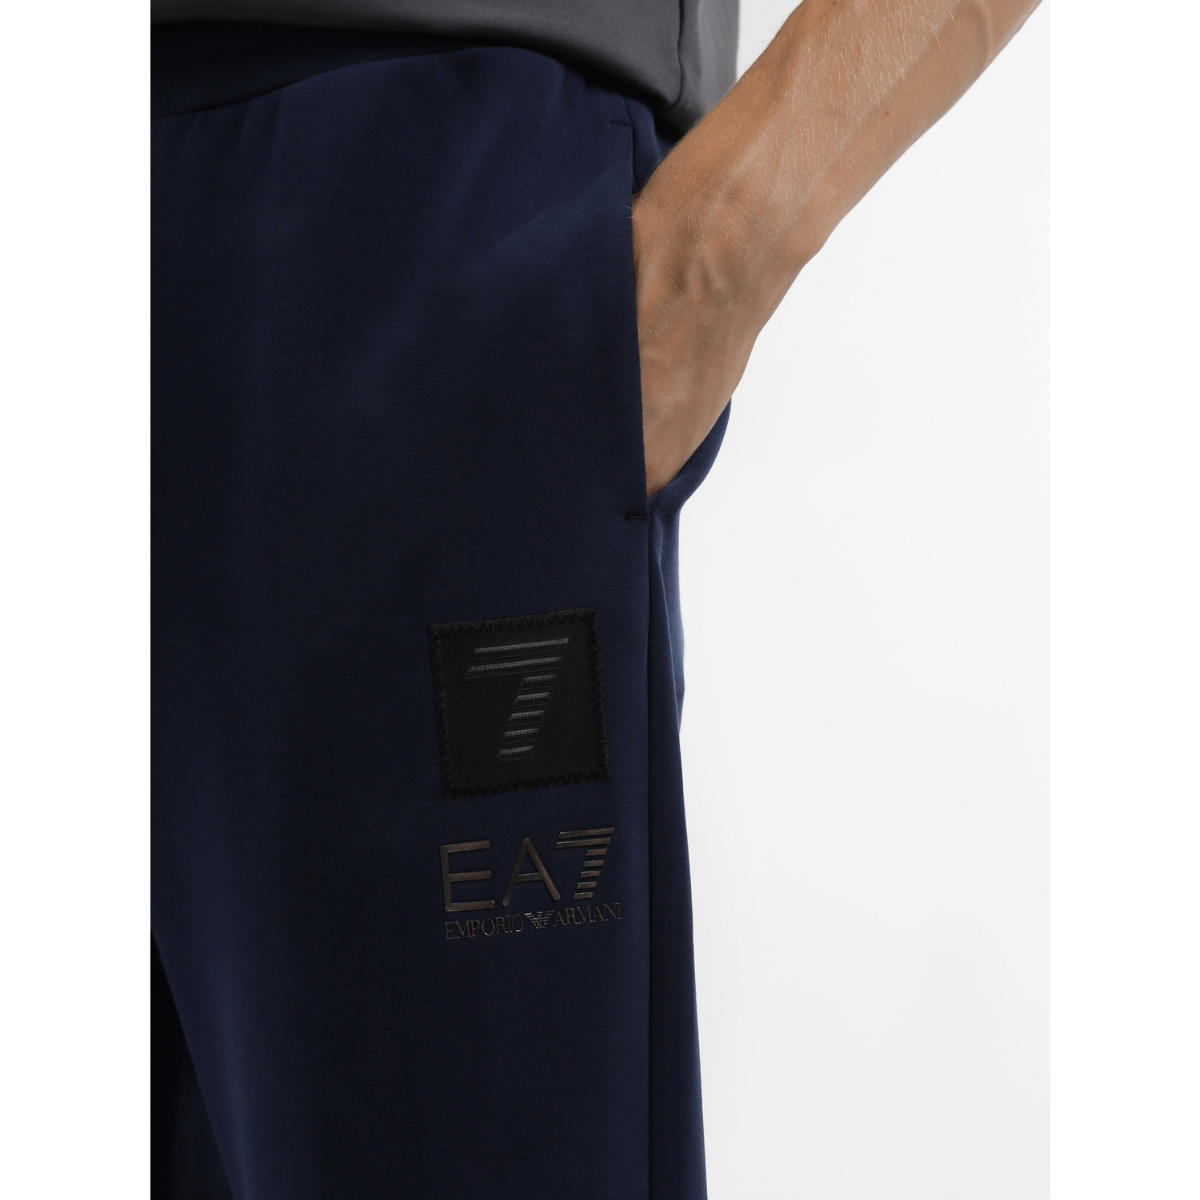 EA7 Giorgio Armani - Man Jersey Trouser - Navy Blue